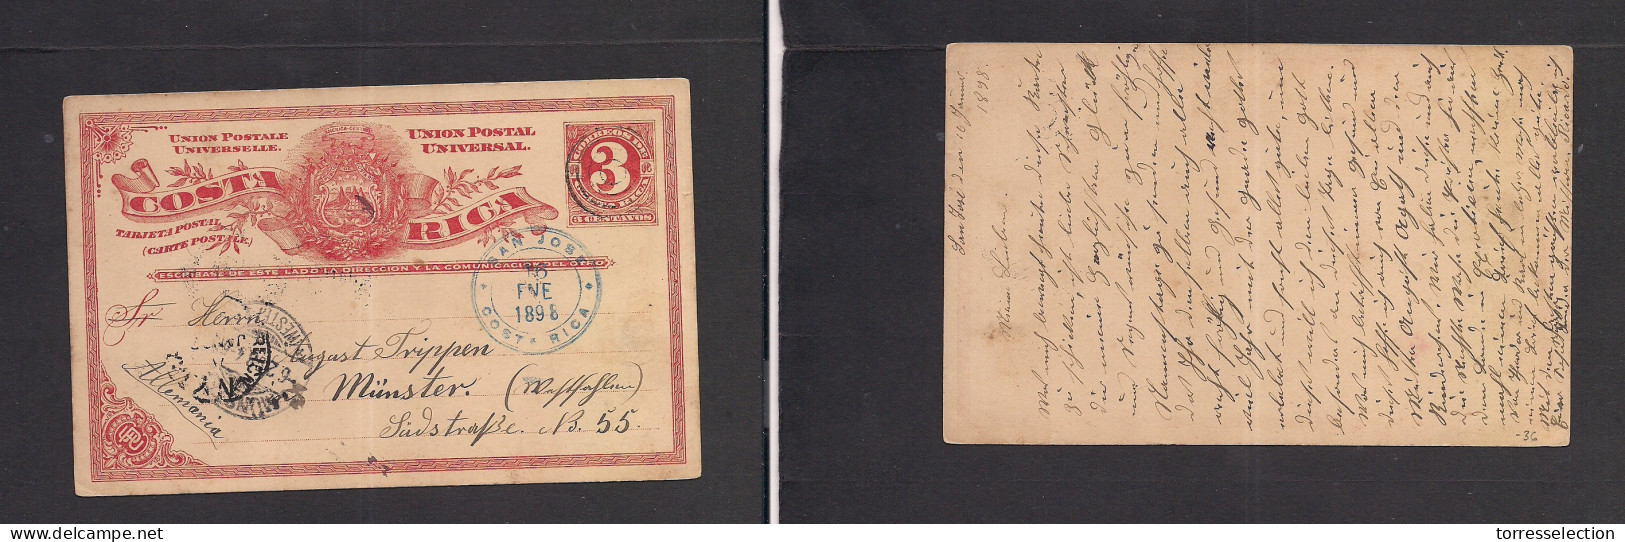 COSTA RICA. 1898 (16 Enero) San Jose - Germany, Munster 3c Red Stat Card, Blue Cds. Via NY. Fine Used. XSALE. - Costa Rica